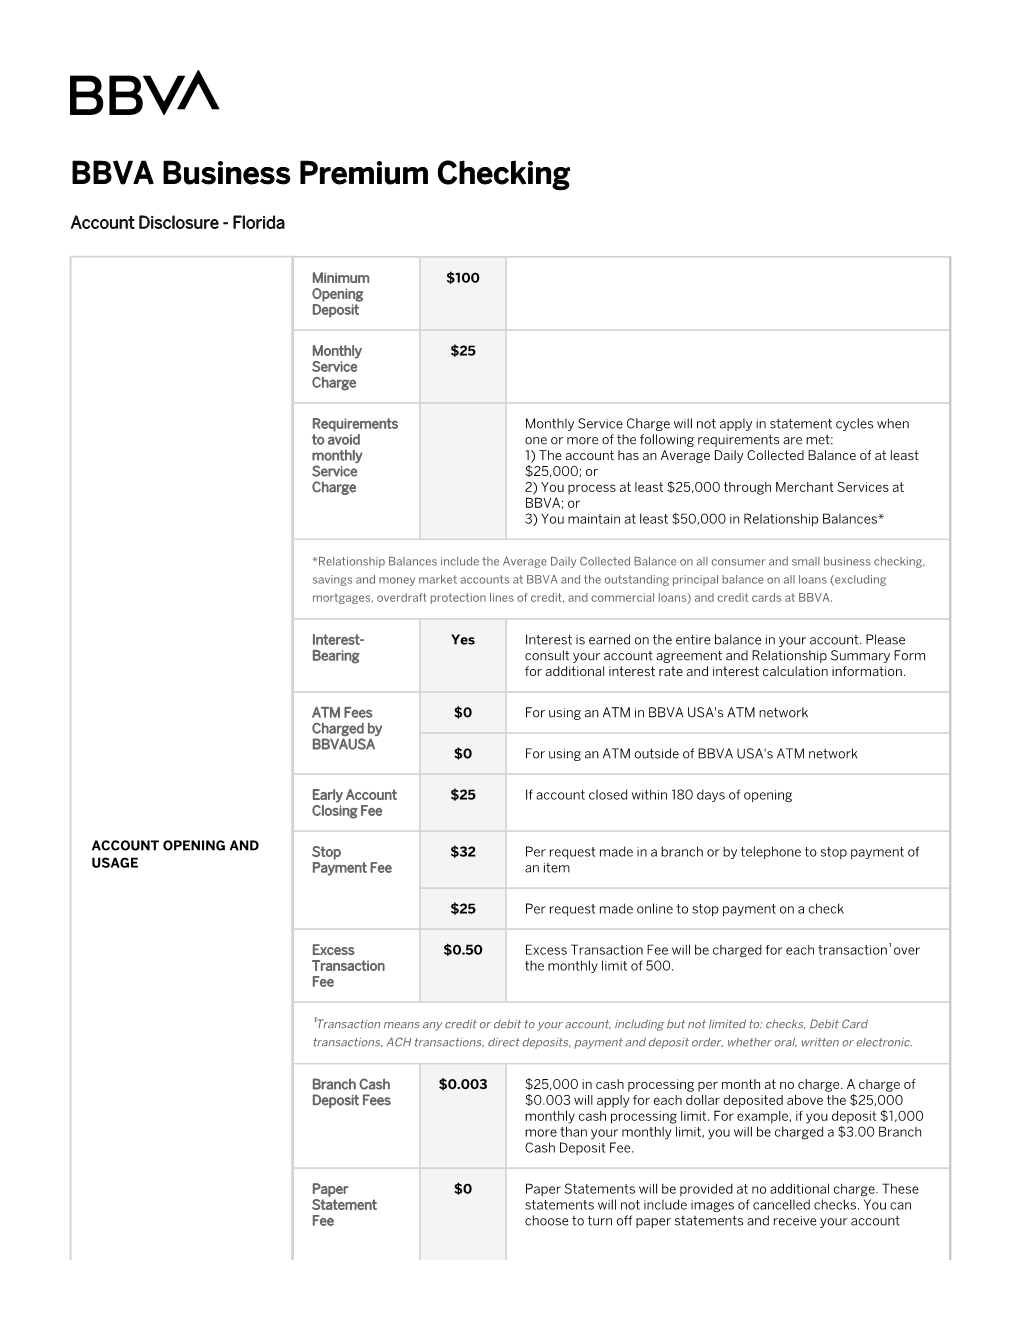 BBVA Business Premium Checking Account Disclosure | Florida